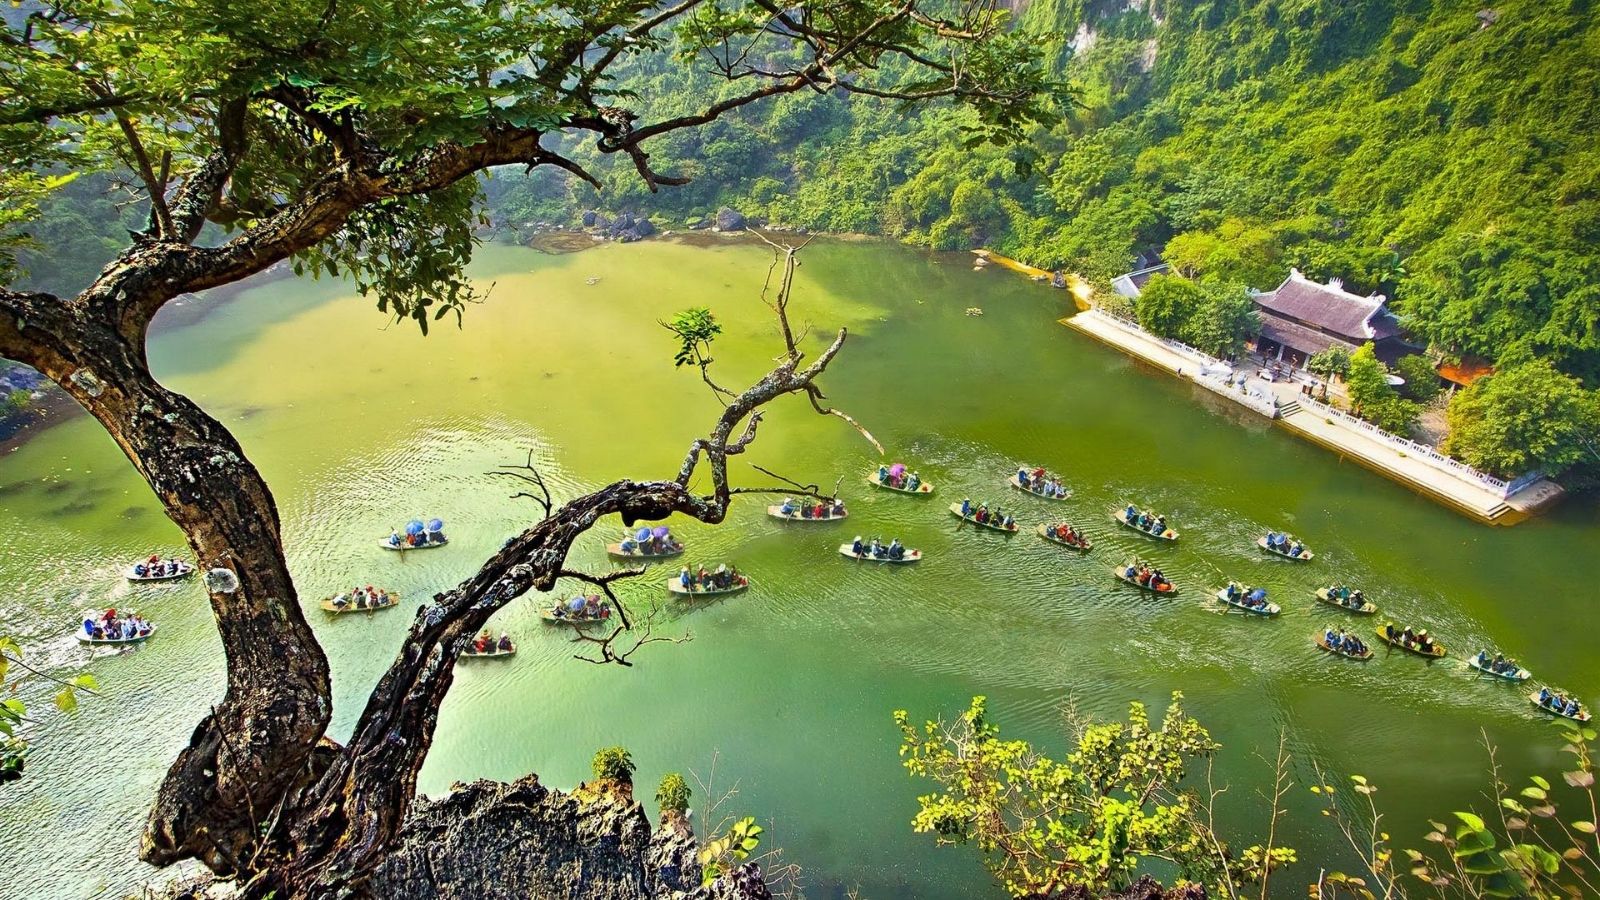 Trang An Scenic Landscape